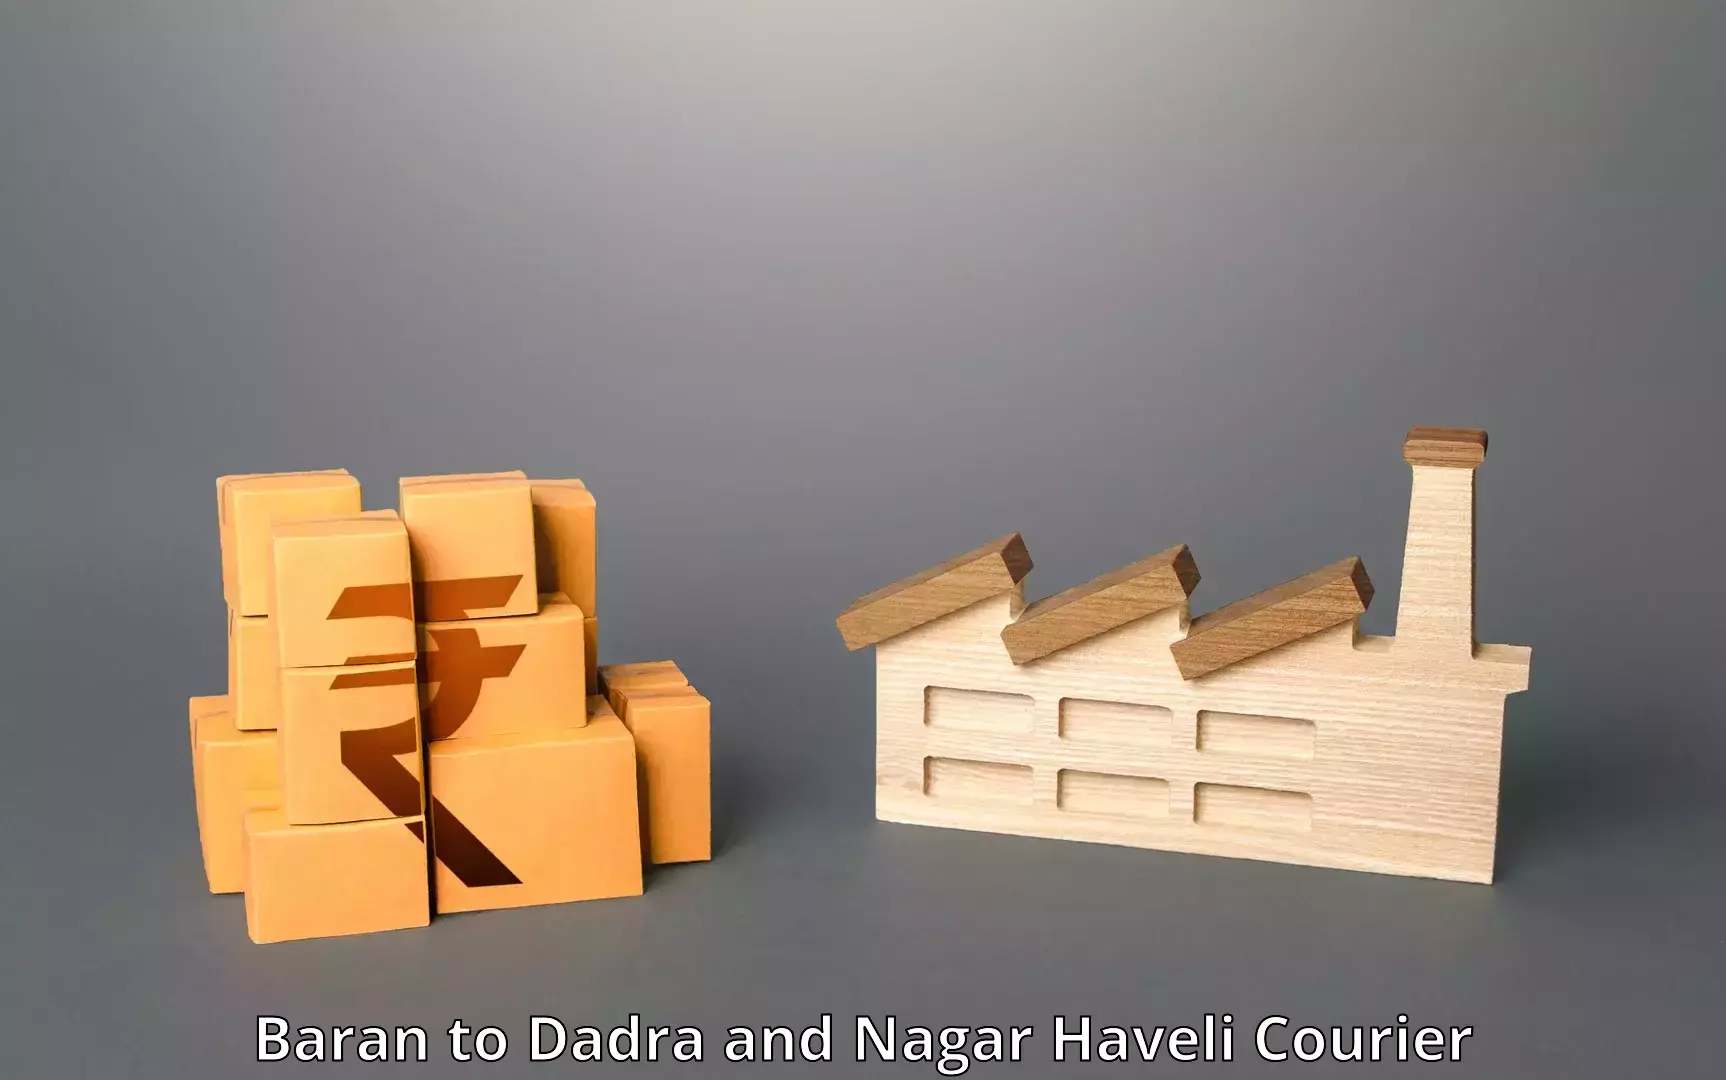 International courier networks Baran to Dadra and Nagar Haveli